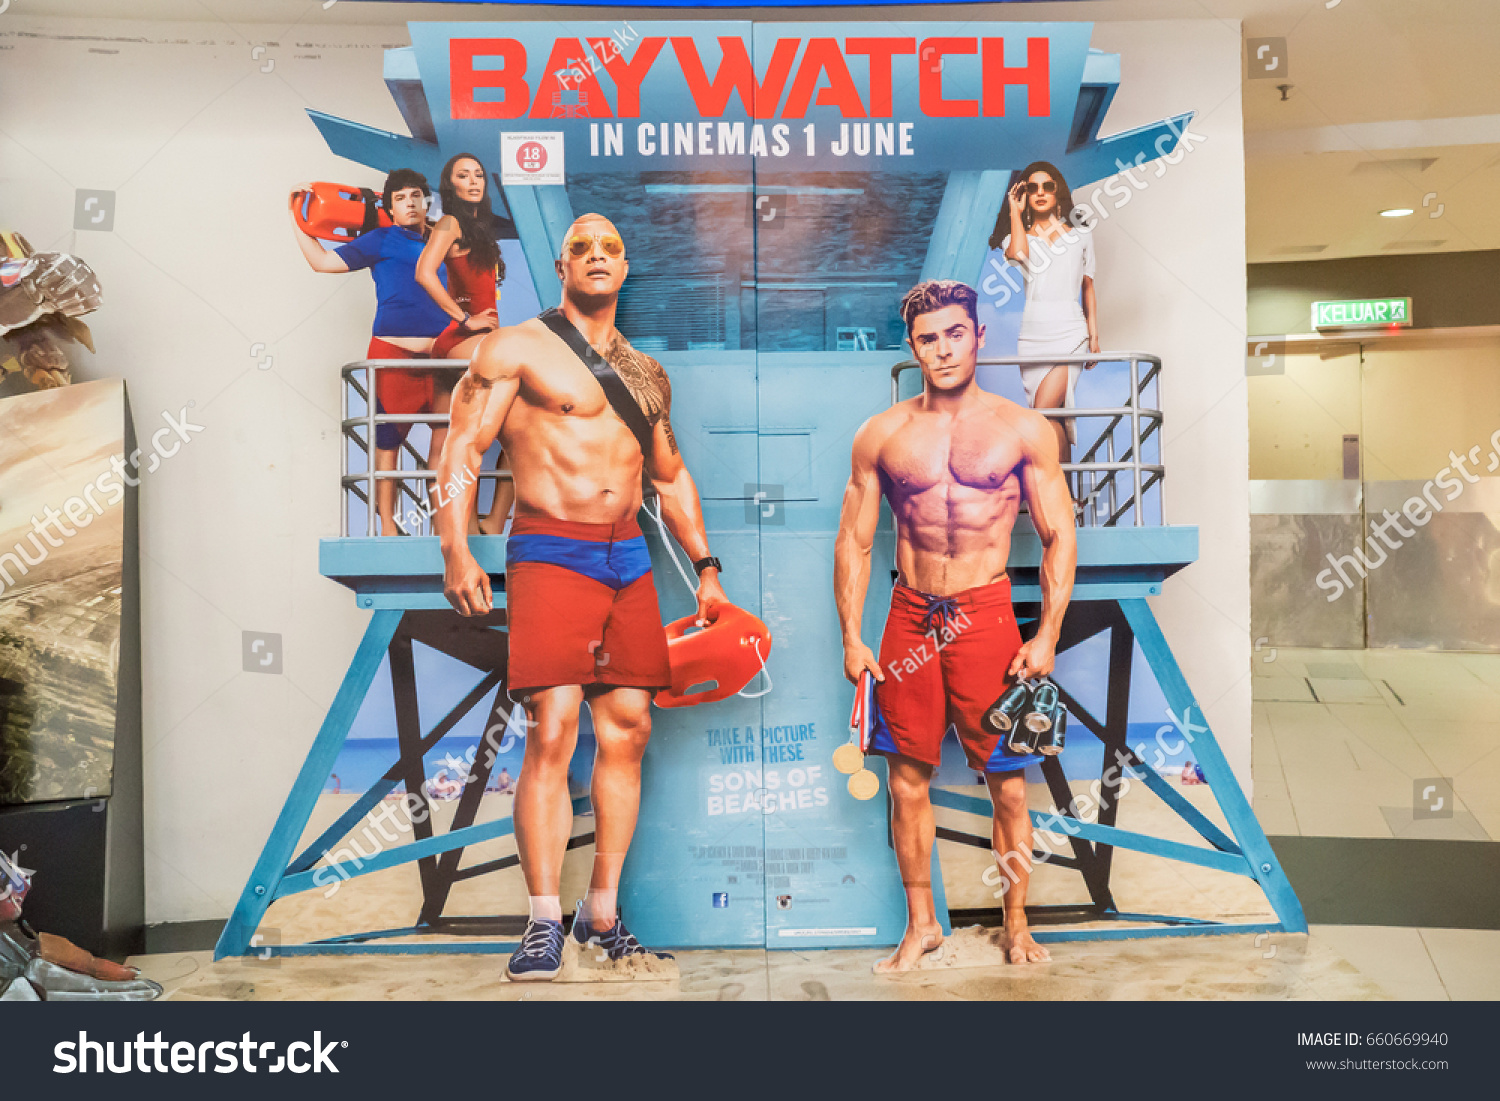 baywatch release date malaysia